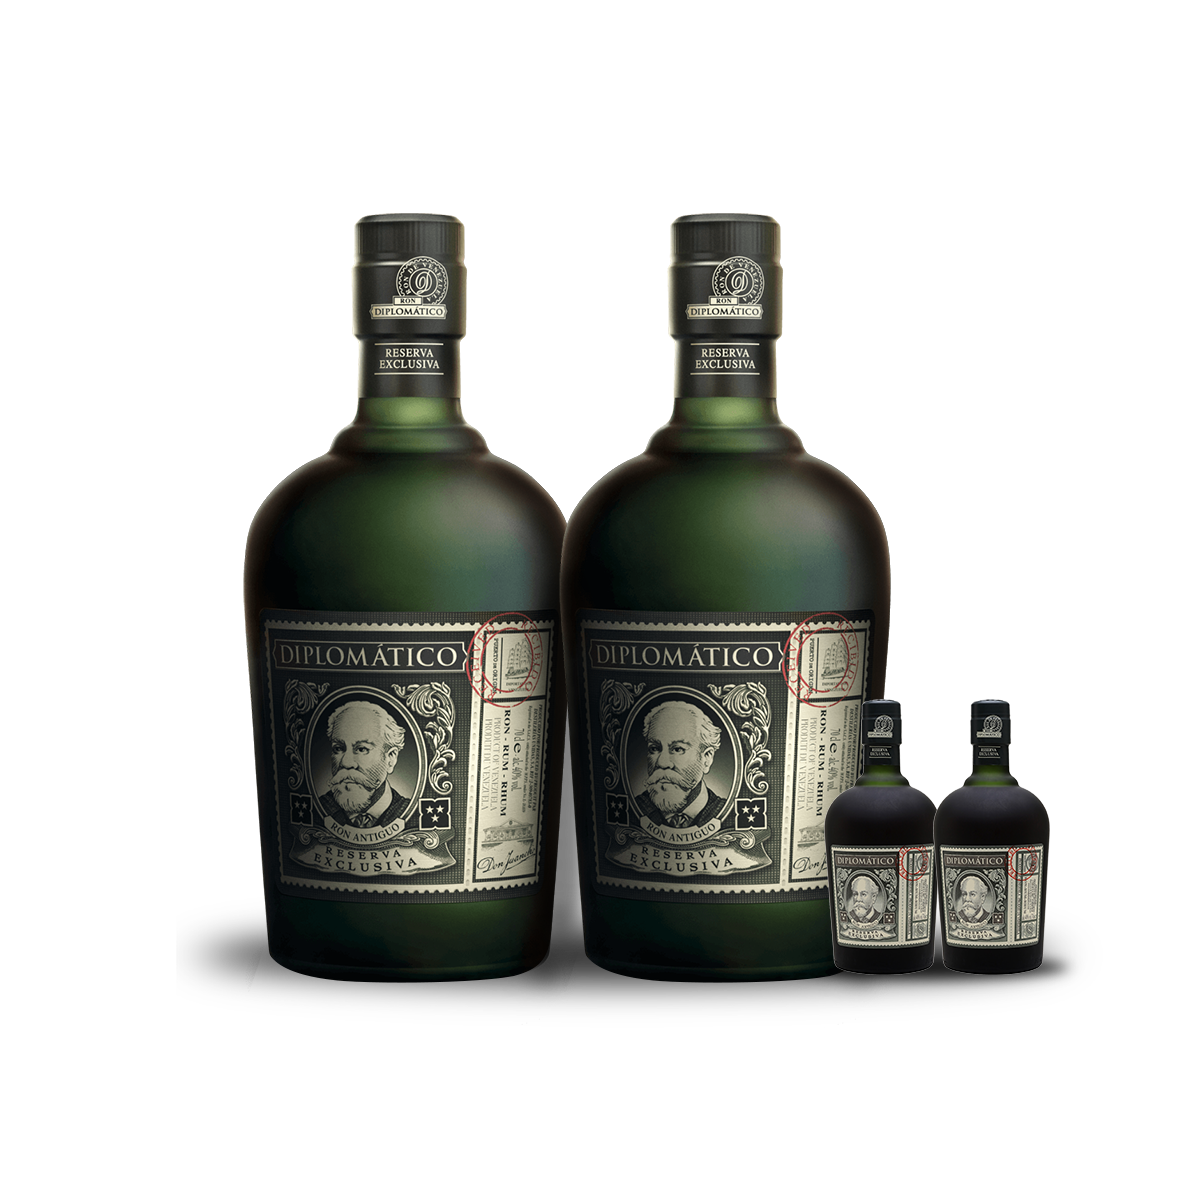 BUY] Diplomático Reserva Exclusiva Rum (2) Bottle Bundle at CaskCartel.com